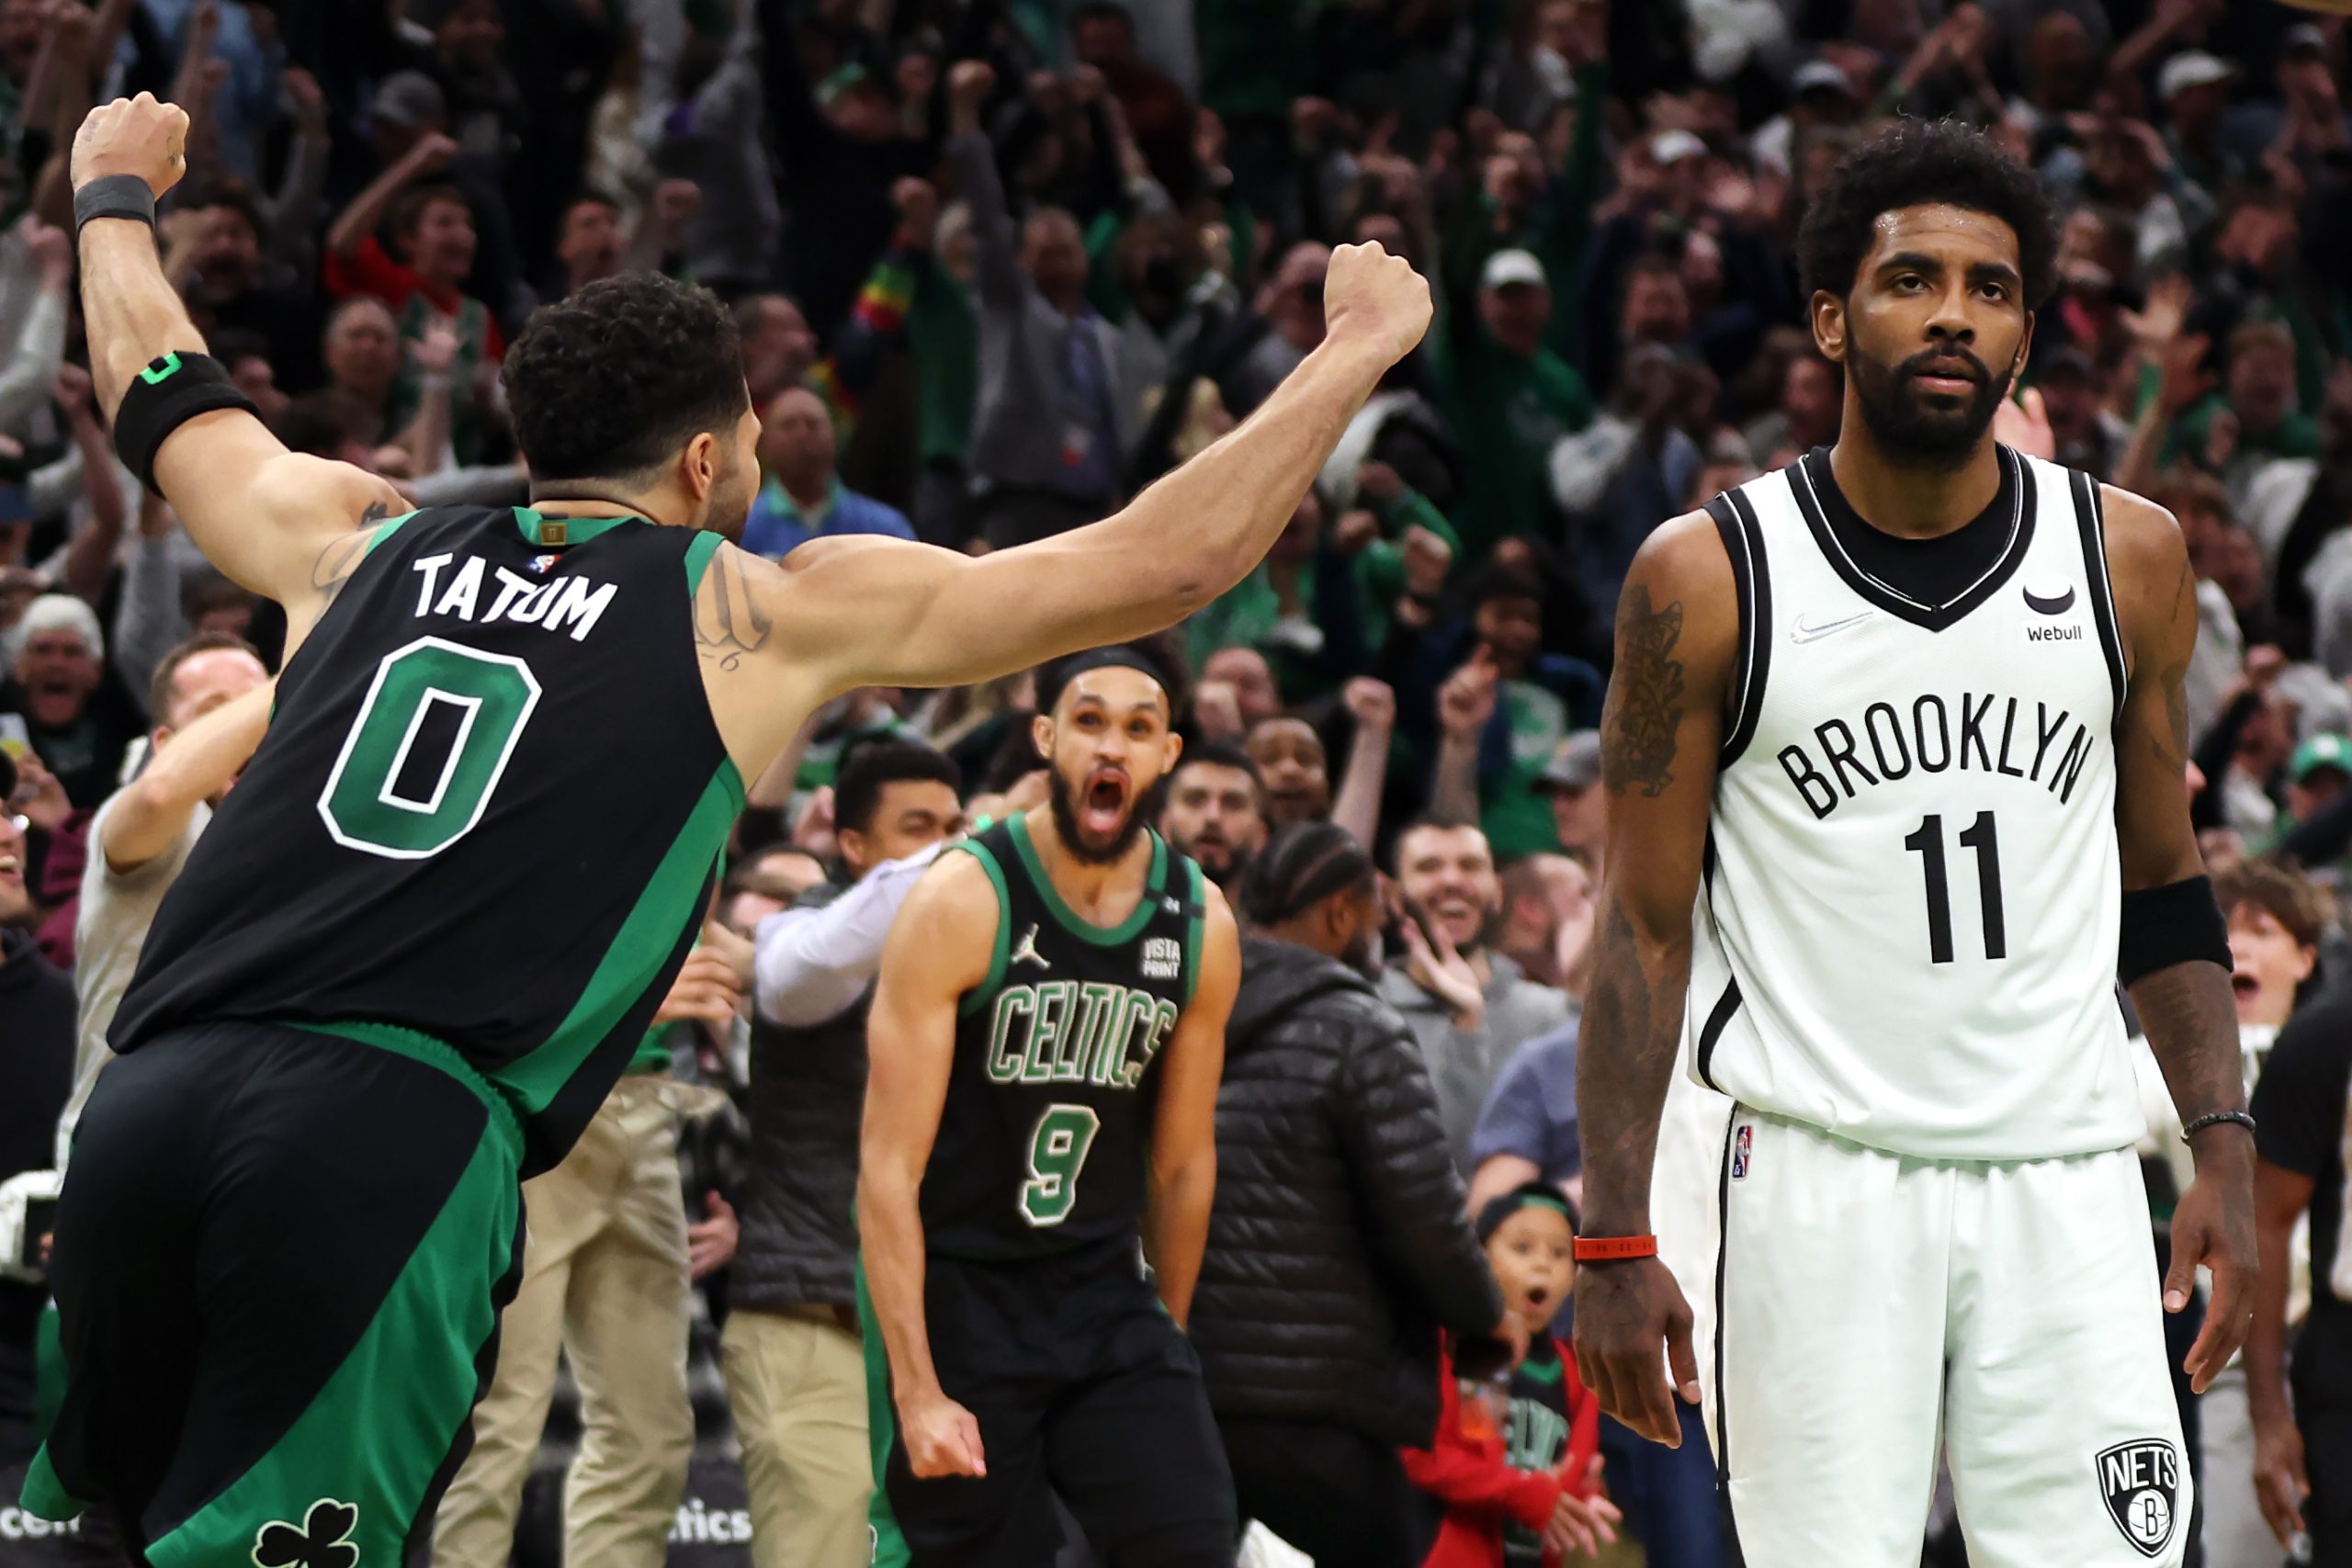 Jayson Tatum of the Boston Celtics celebrates the game winning basket as Kyrie Irving of the Brooklyn Nets looks on.